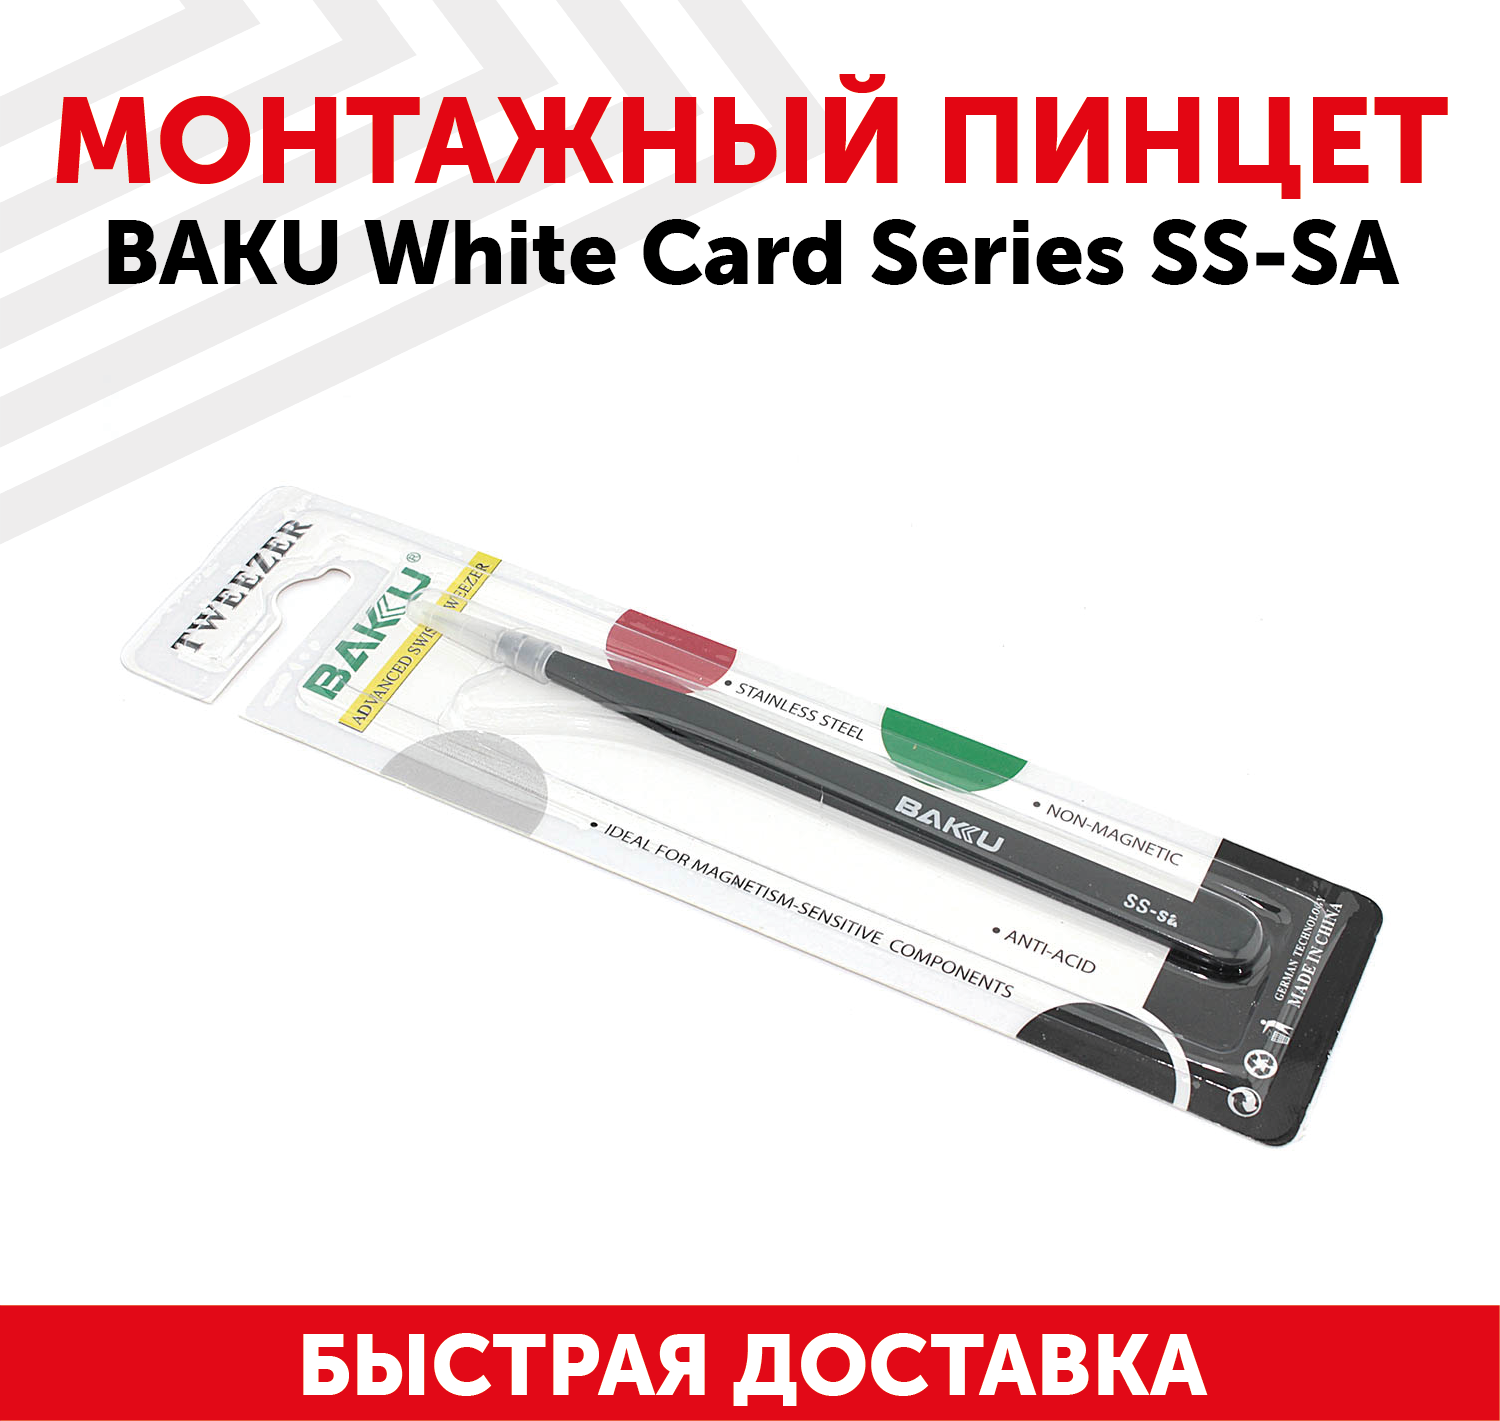 Пинцет Baku White Card Series SS-SA - фотография № 1